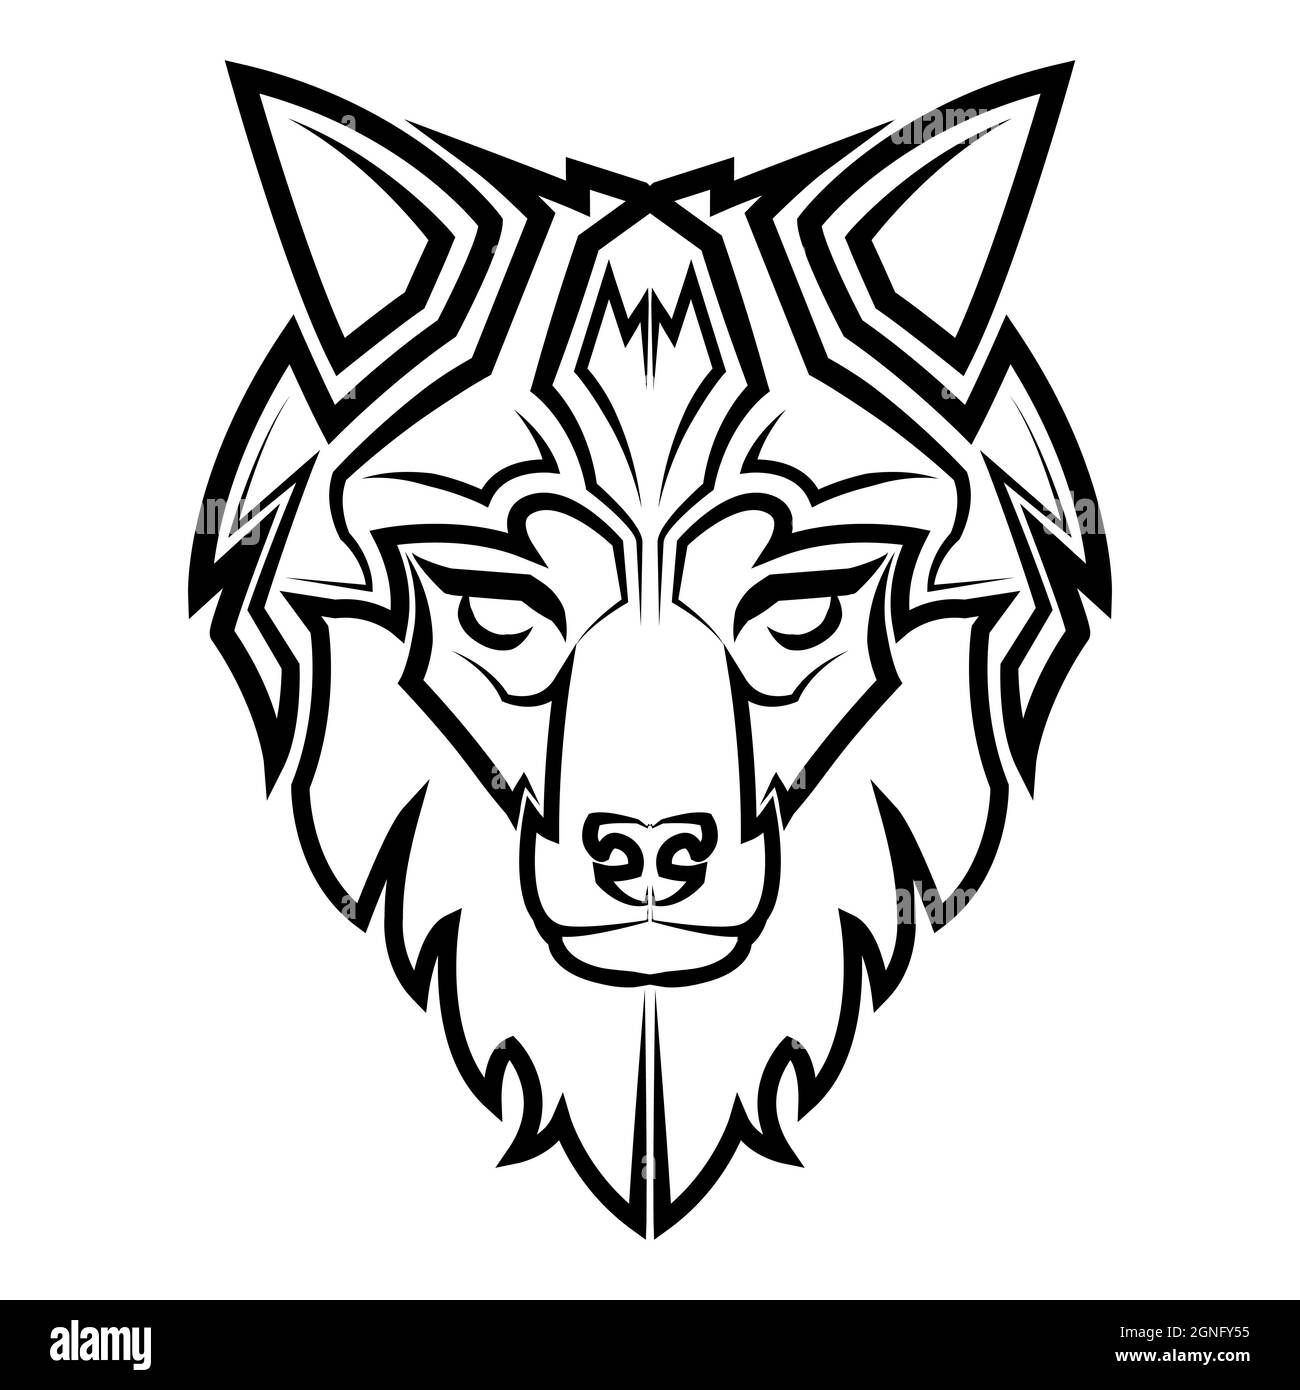 Wolf tribal Imágenes recortadas de stock - Página 2 - Alamy